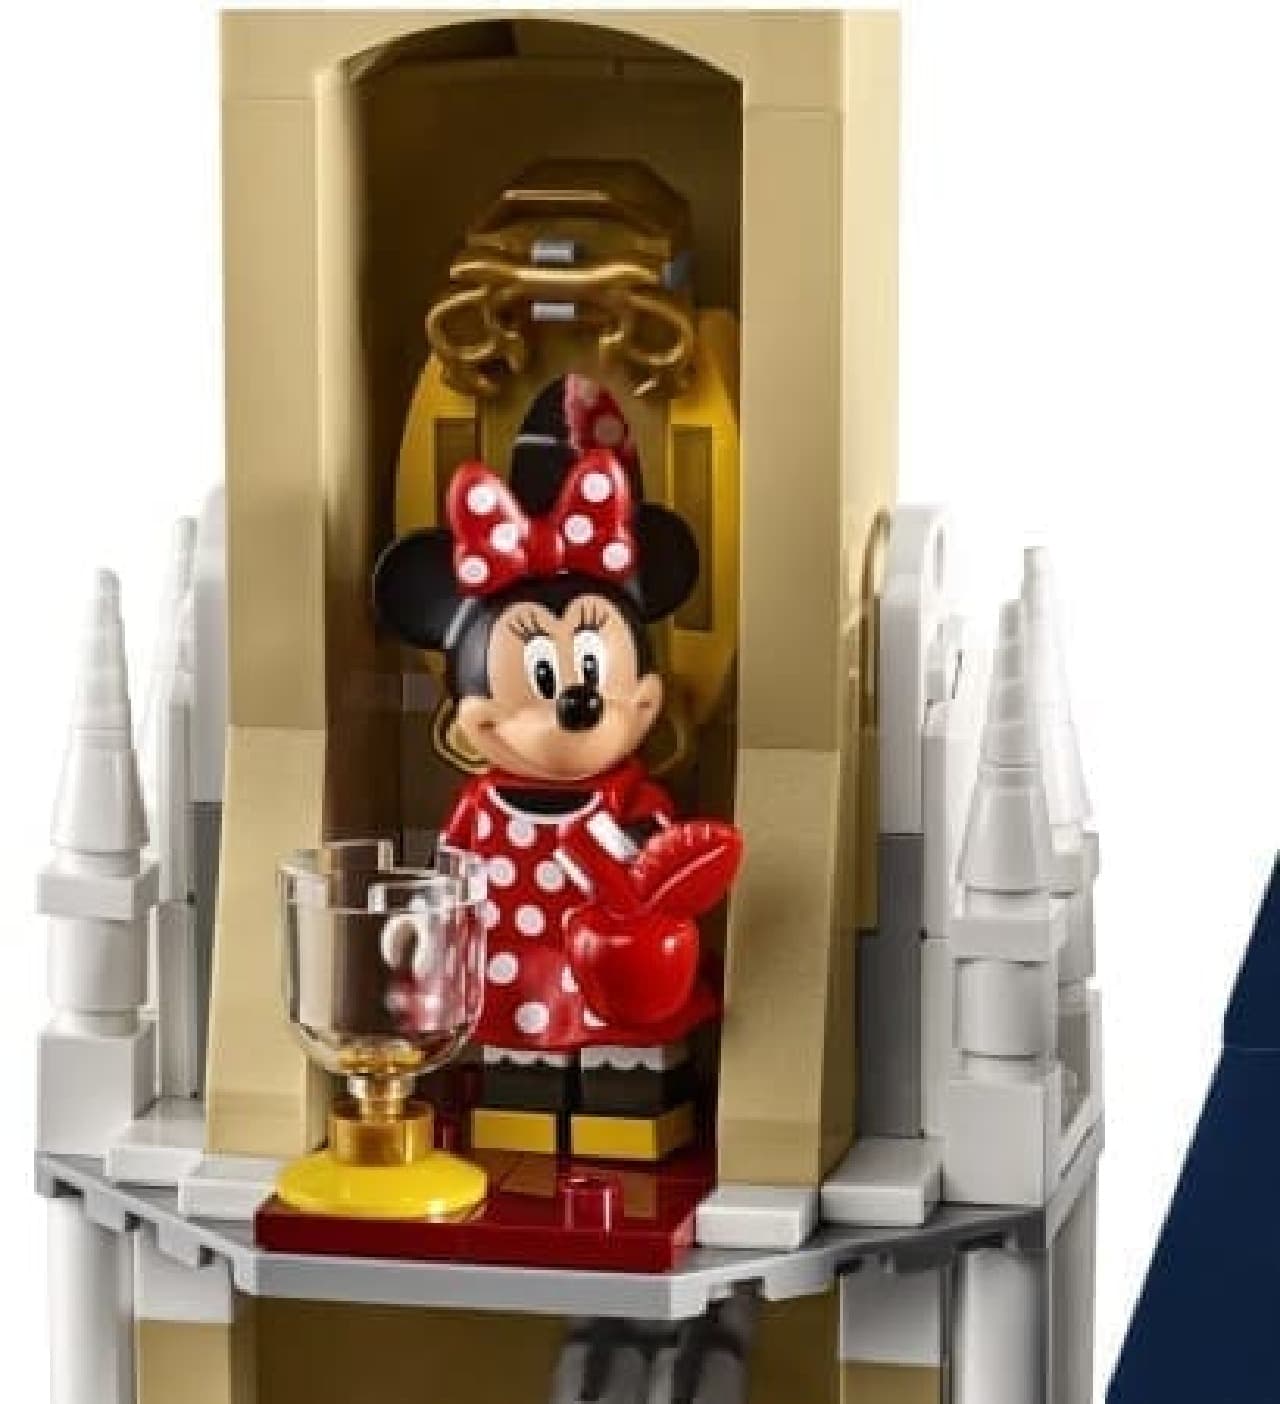 Lego Disney Castle